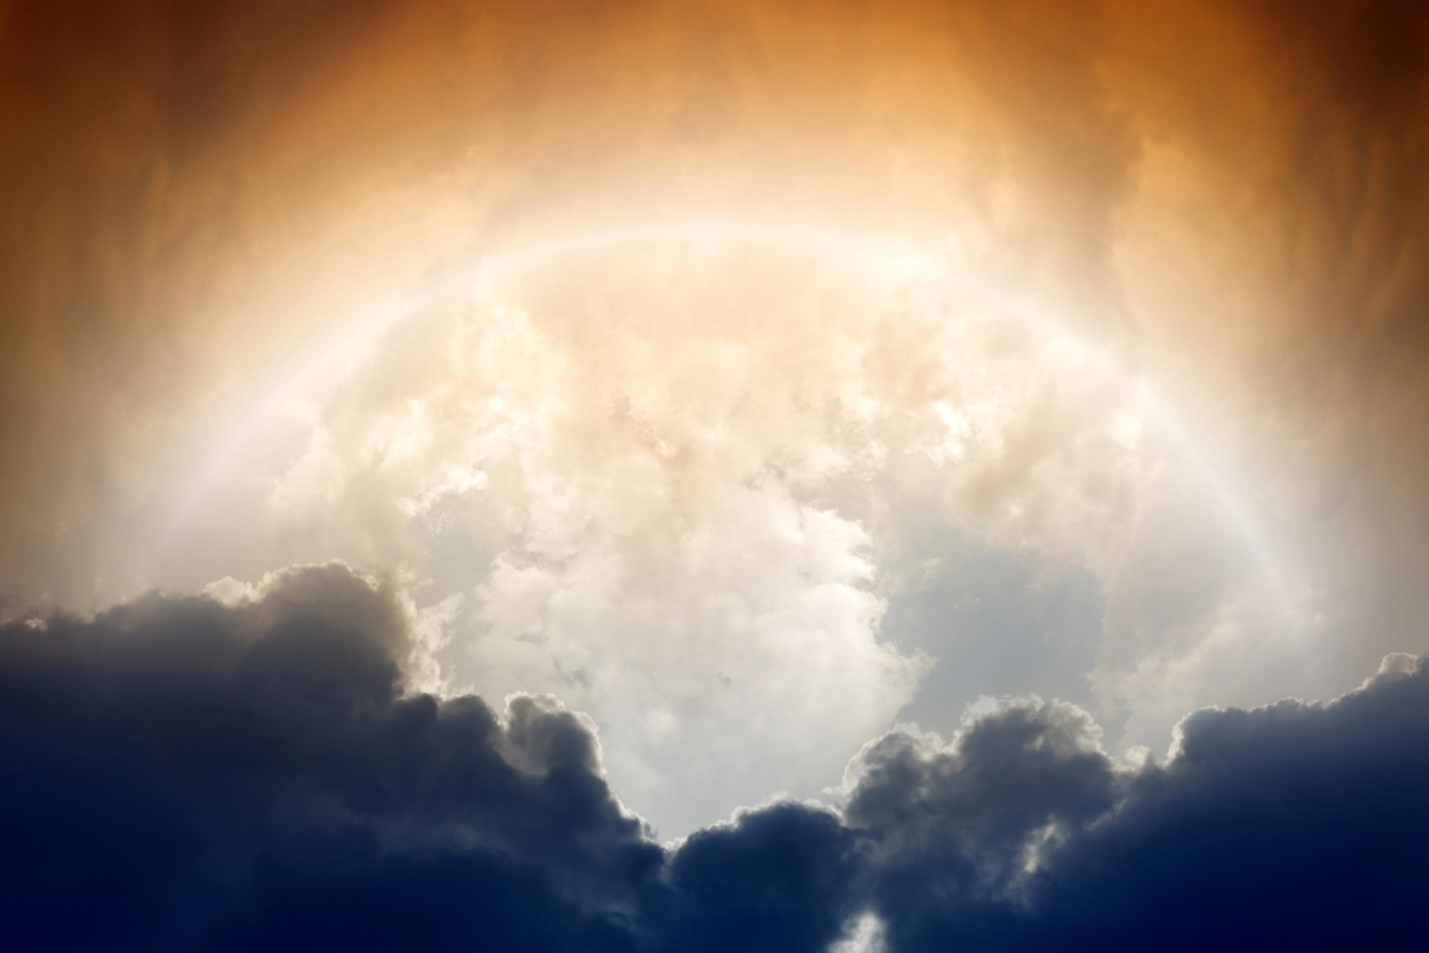 A sun shining through clouds

Description automatically generated